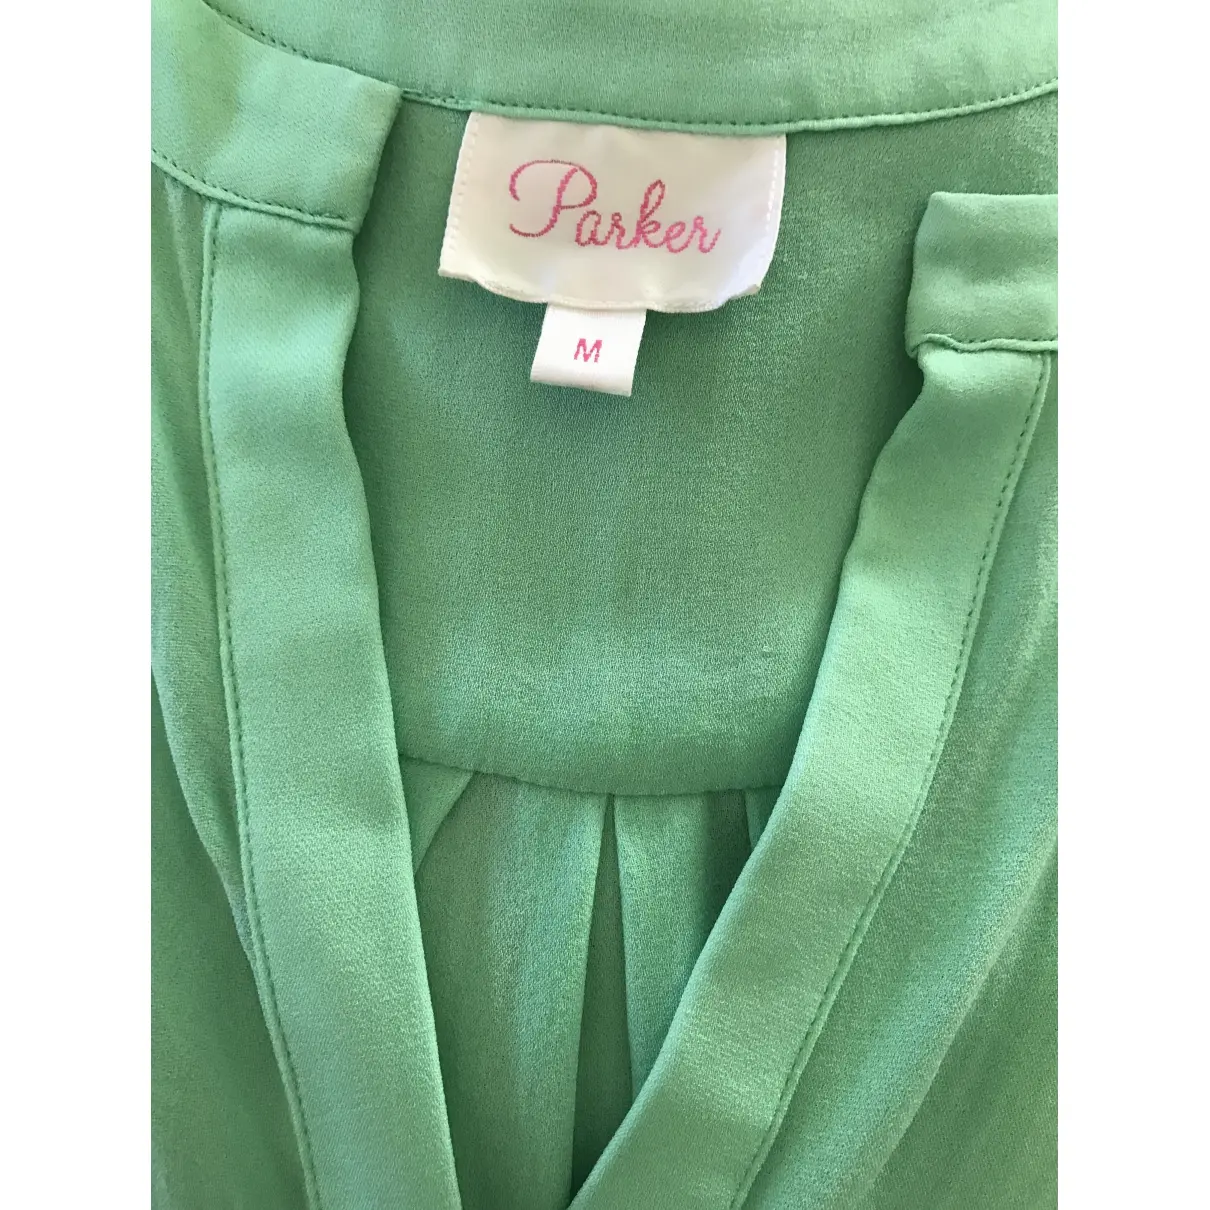 Buy PARKER NY Silk blouse online